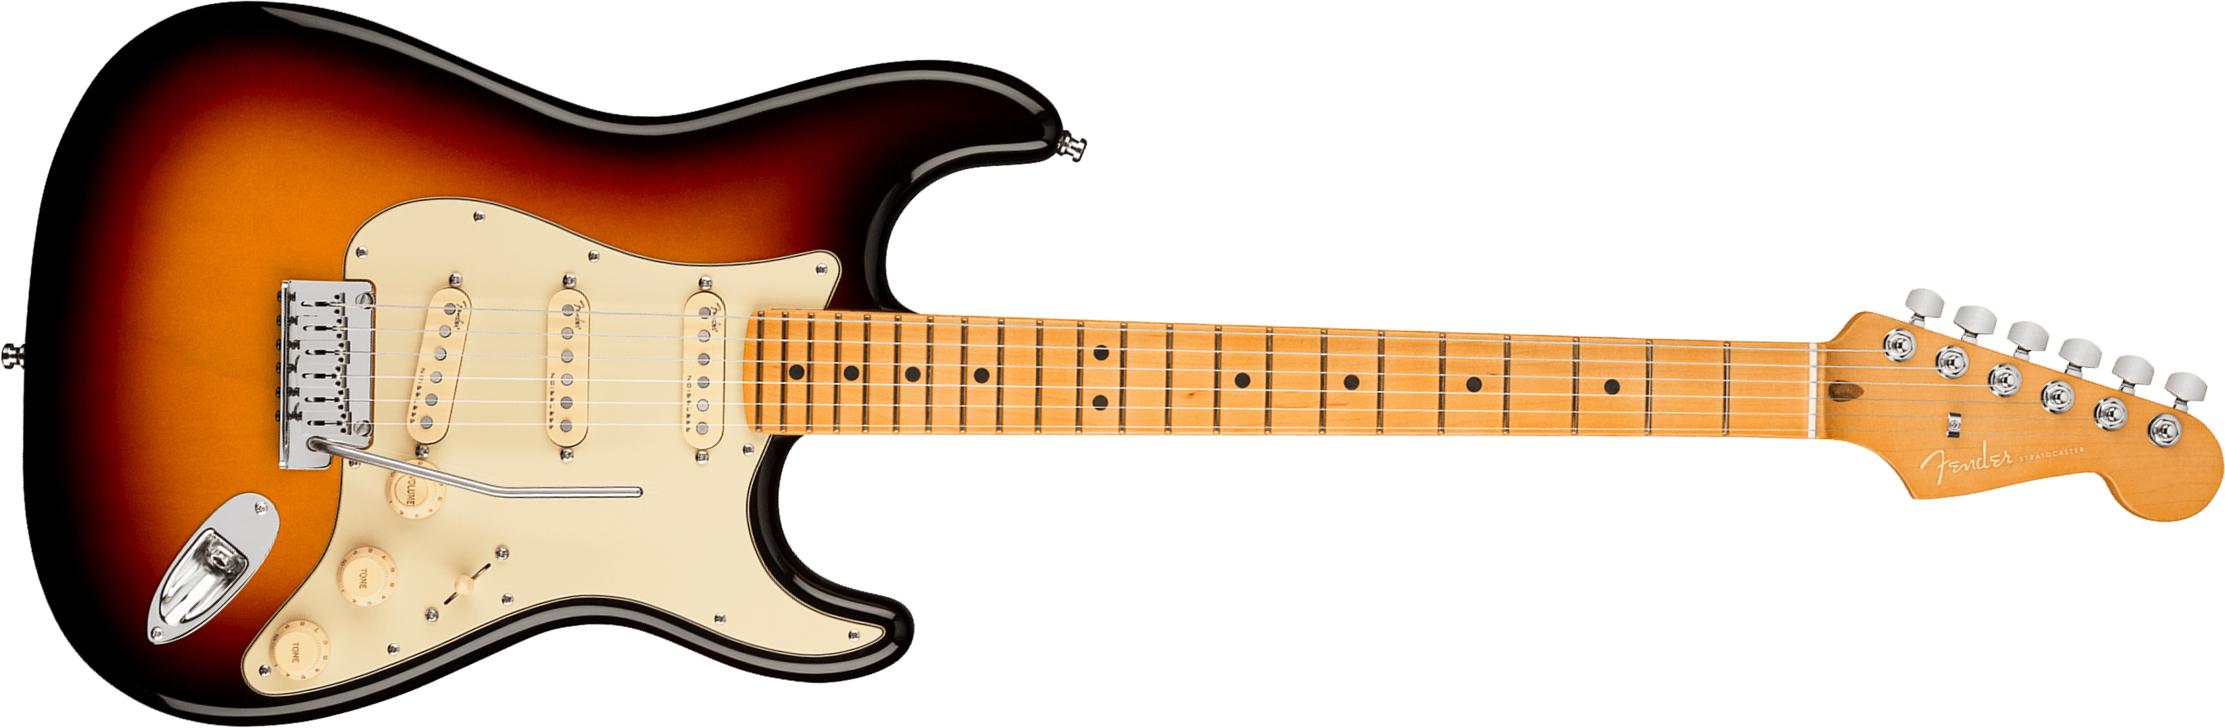 Fender Strat American Ultra 2019 Usa Mn - Ultraburst - Guitare Électrique Forme Str - Main picture